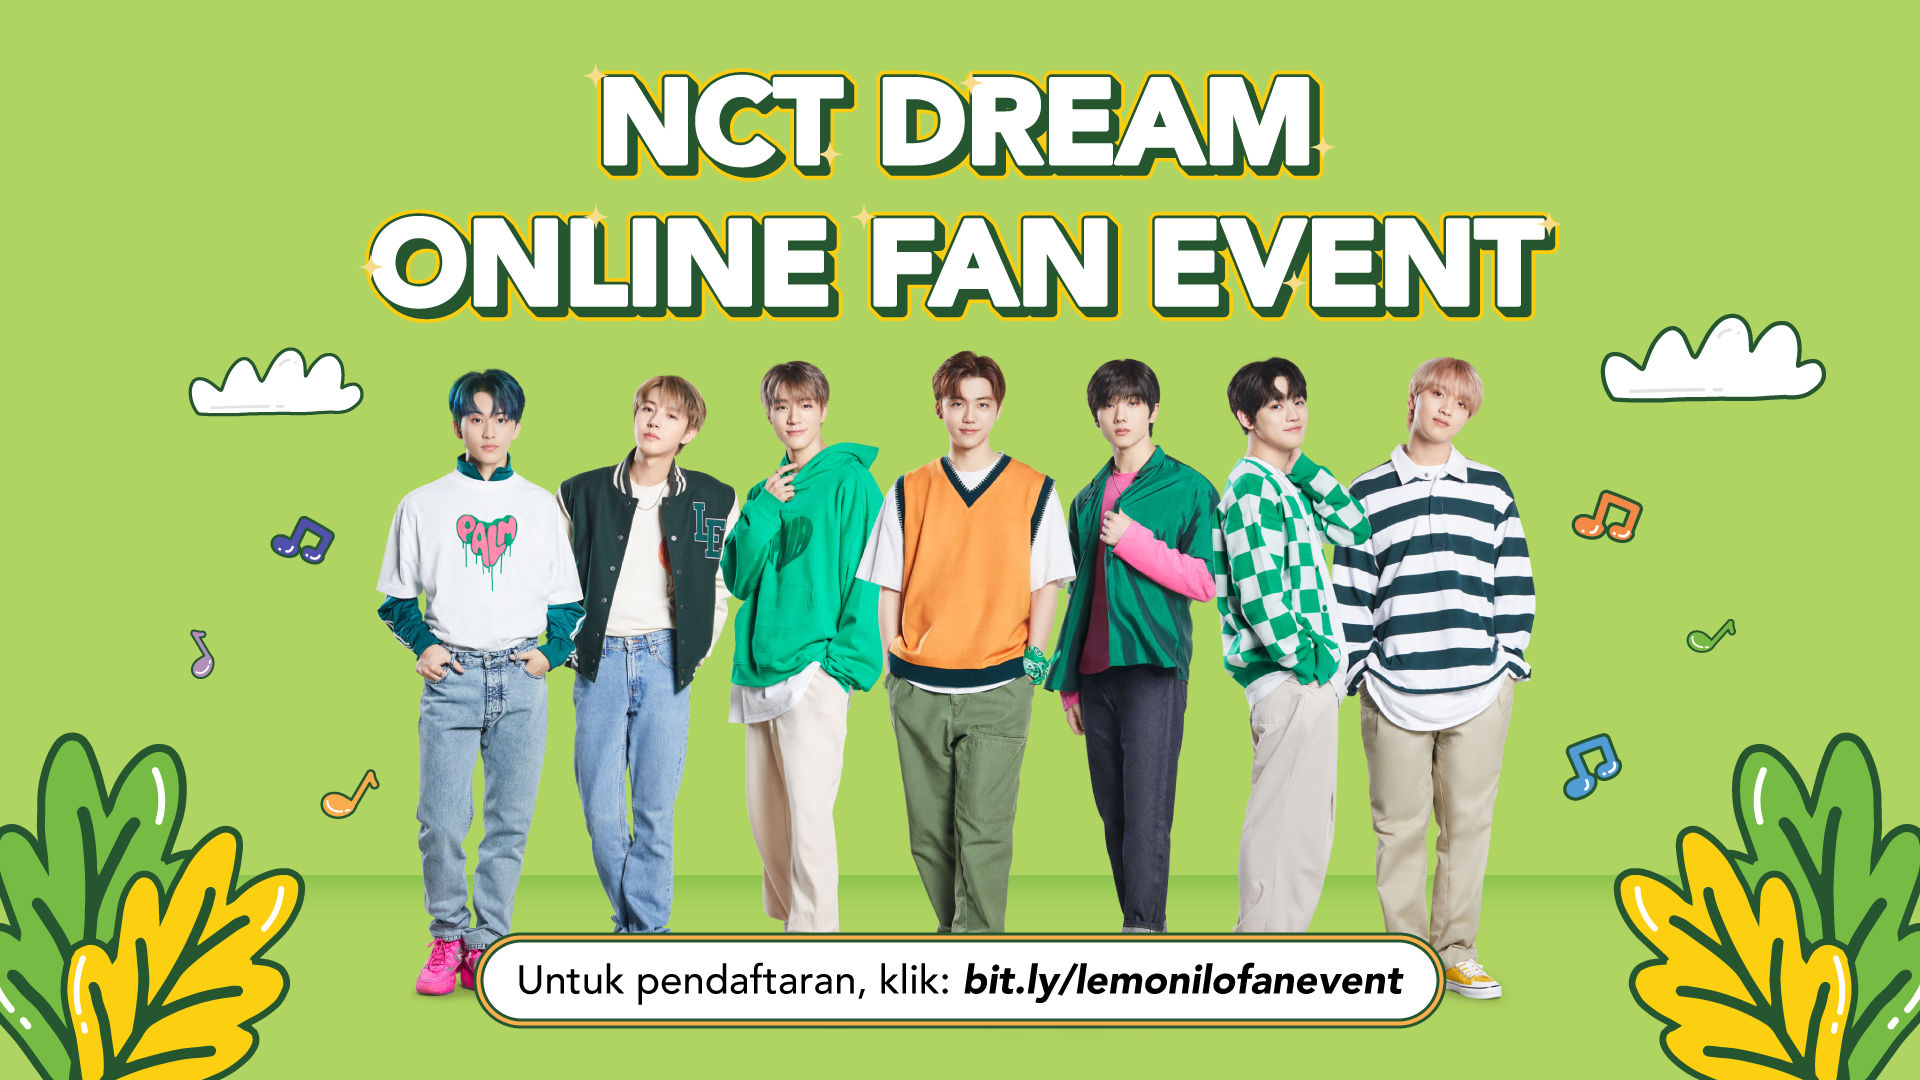  NCT Dream Online Fan Event.